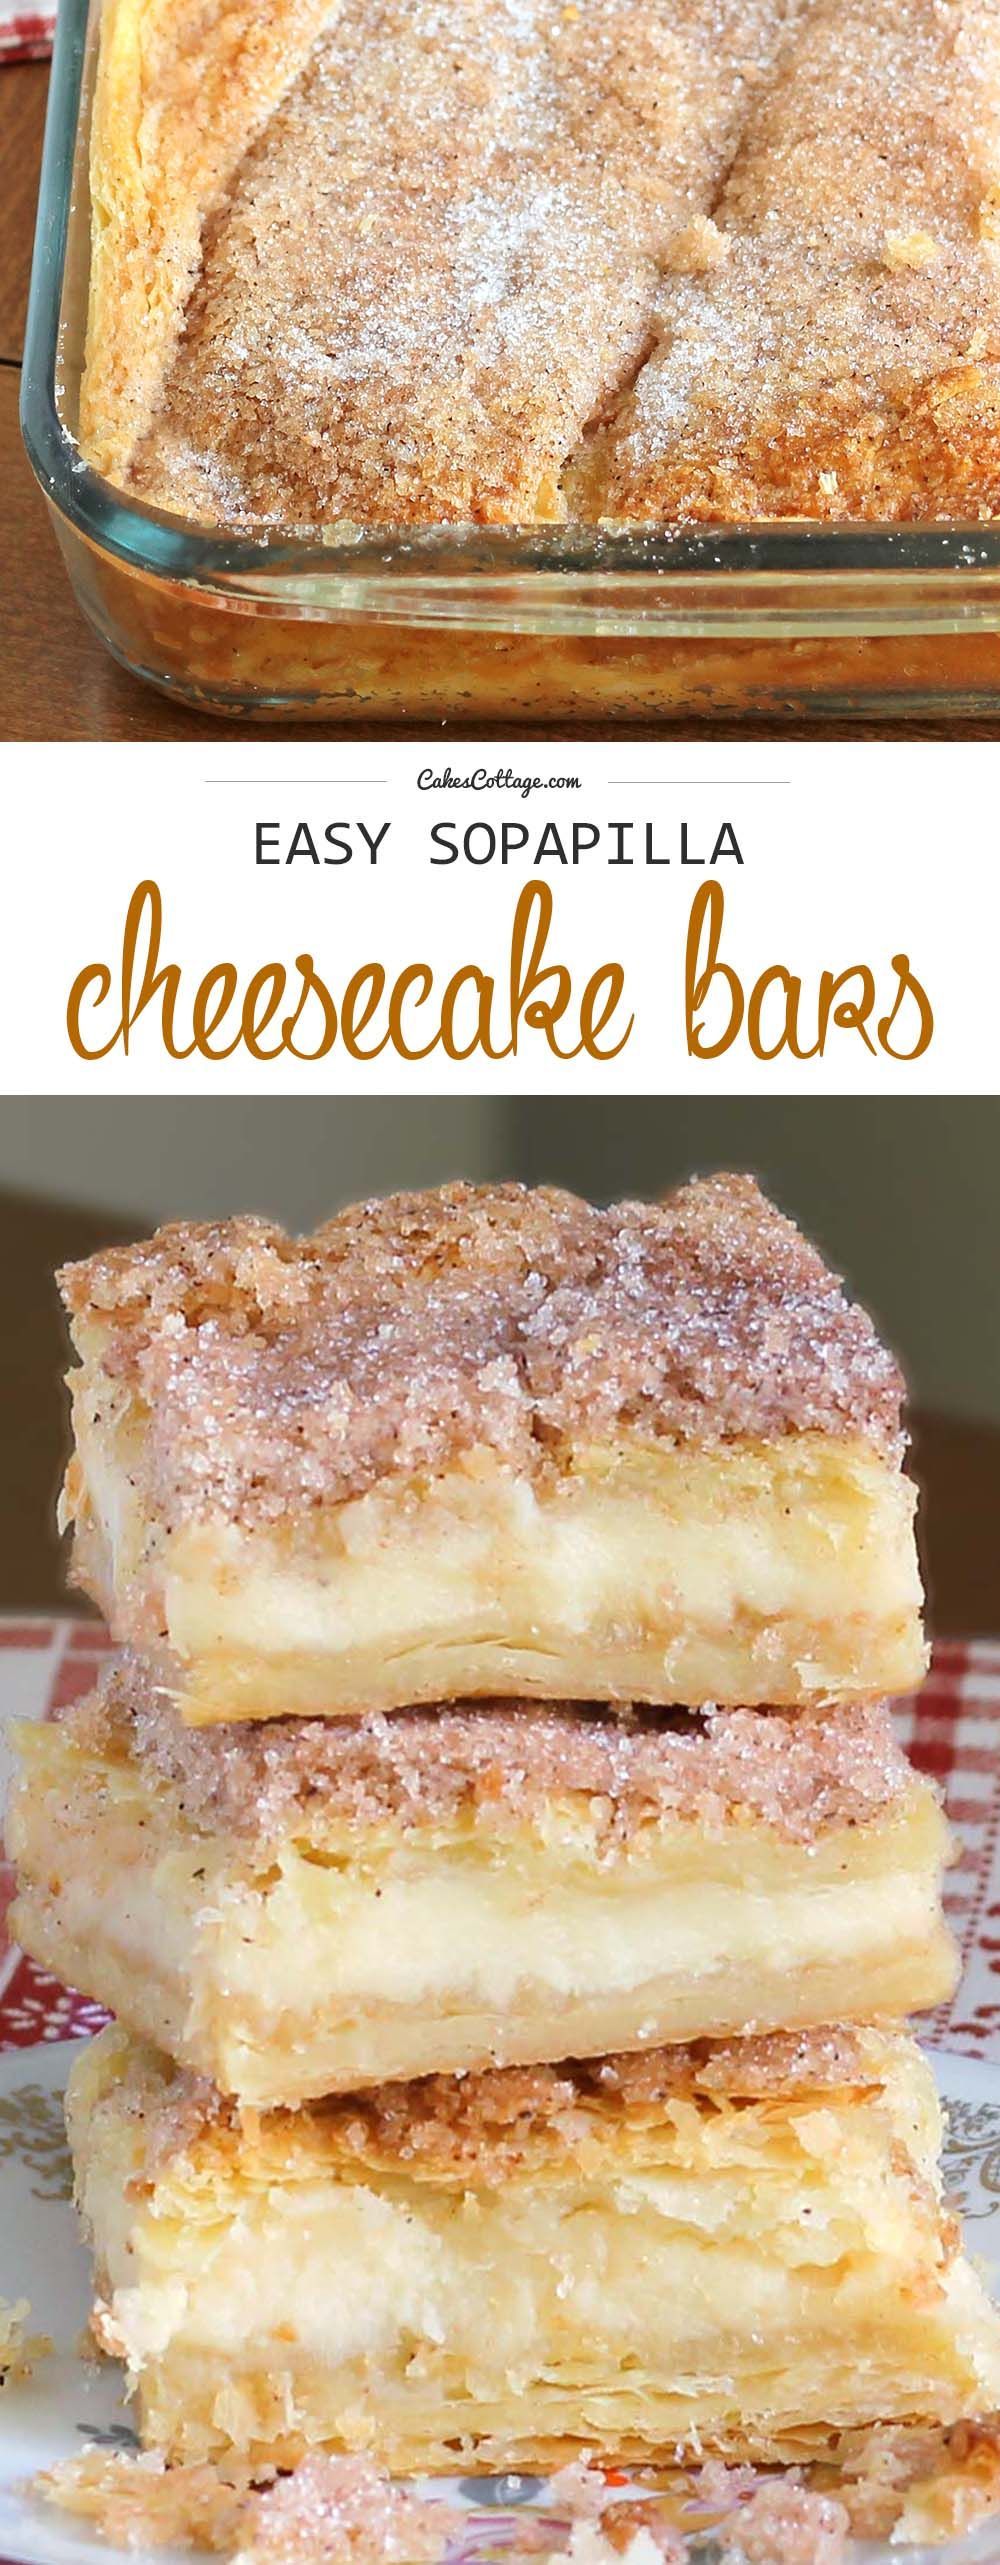 Easy Sopapilla Cheesecake Bars (uses crescent rolls)